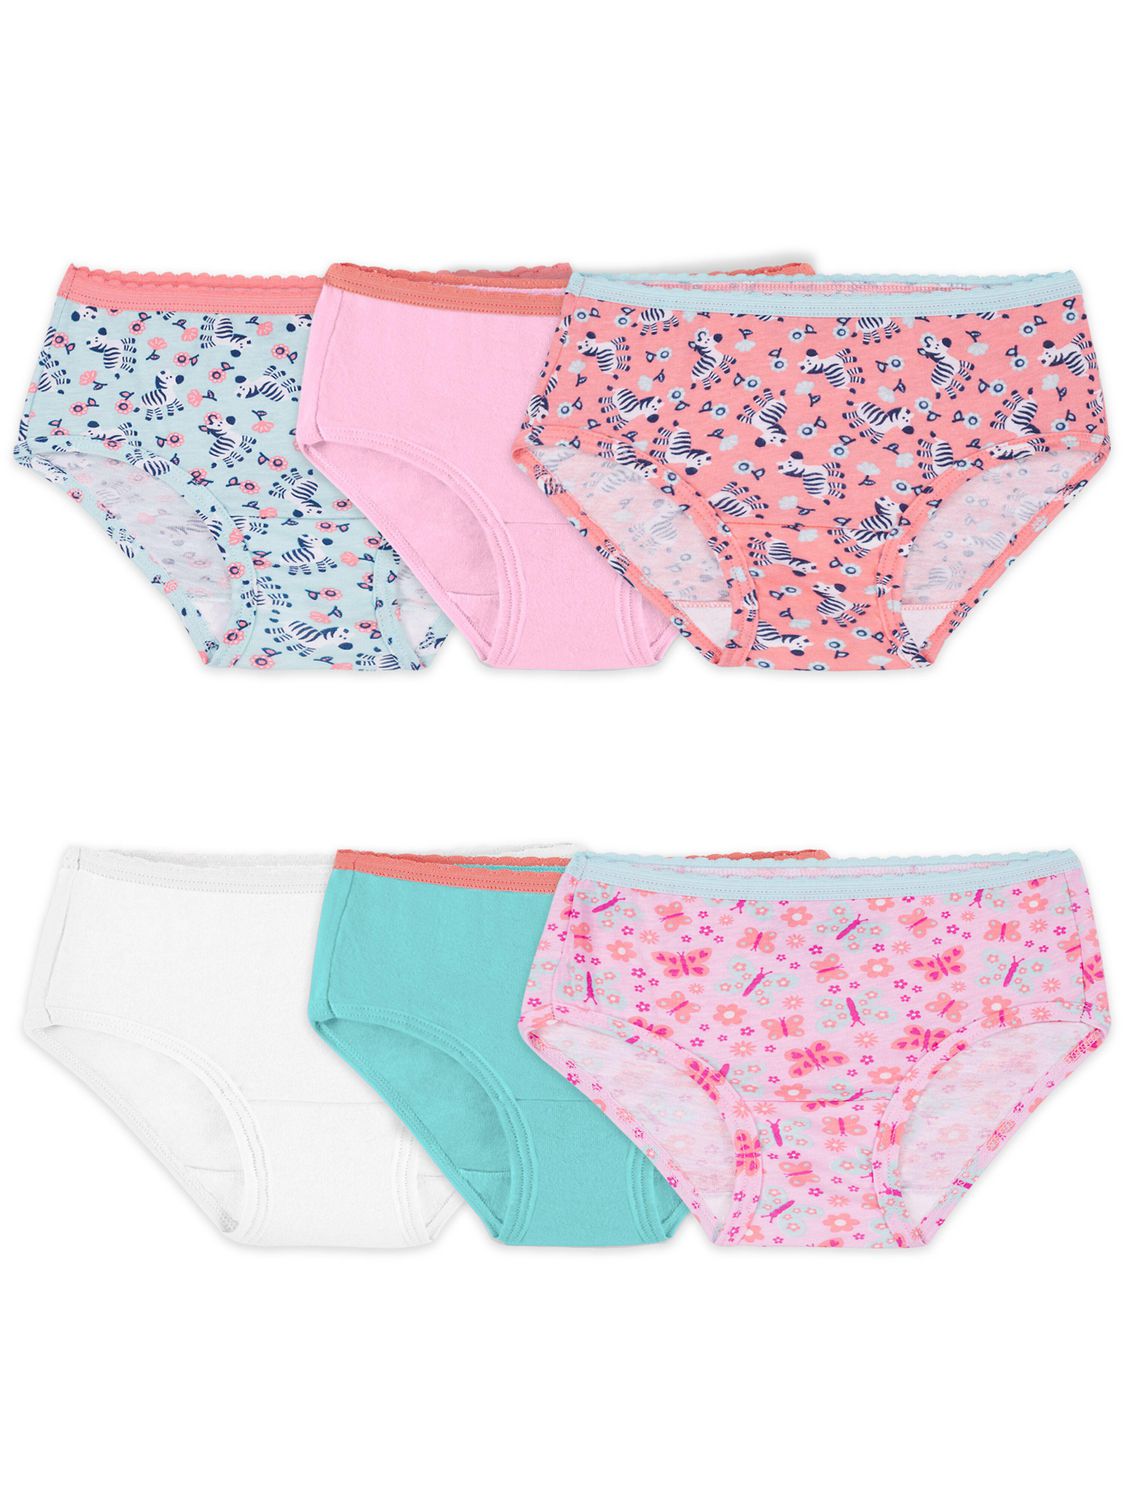 LOL Surprise Girls Panties Underwear 8-Pack Sizes 2T/3T, 4T, 4, 6, 8